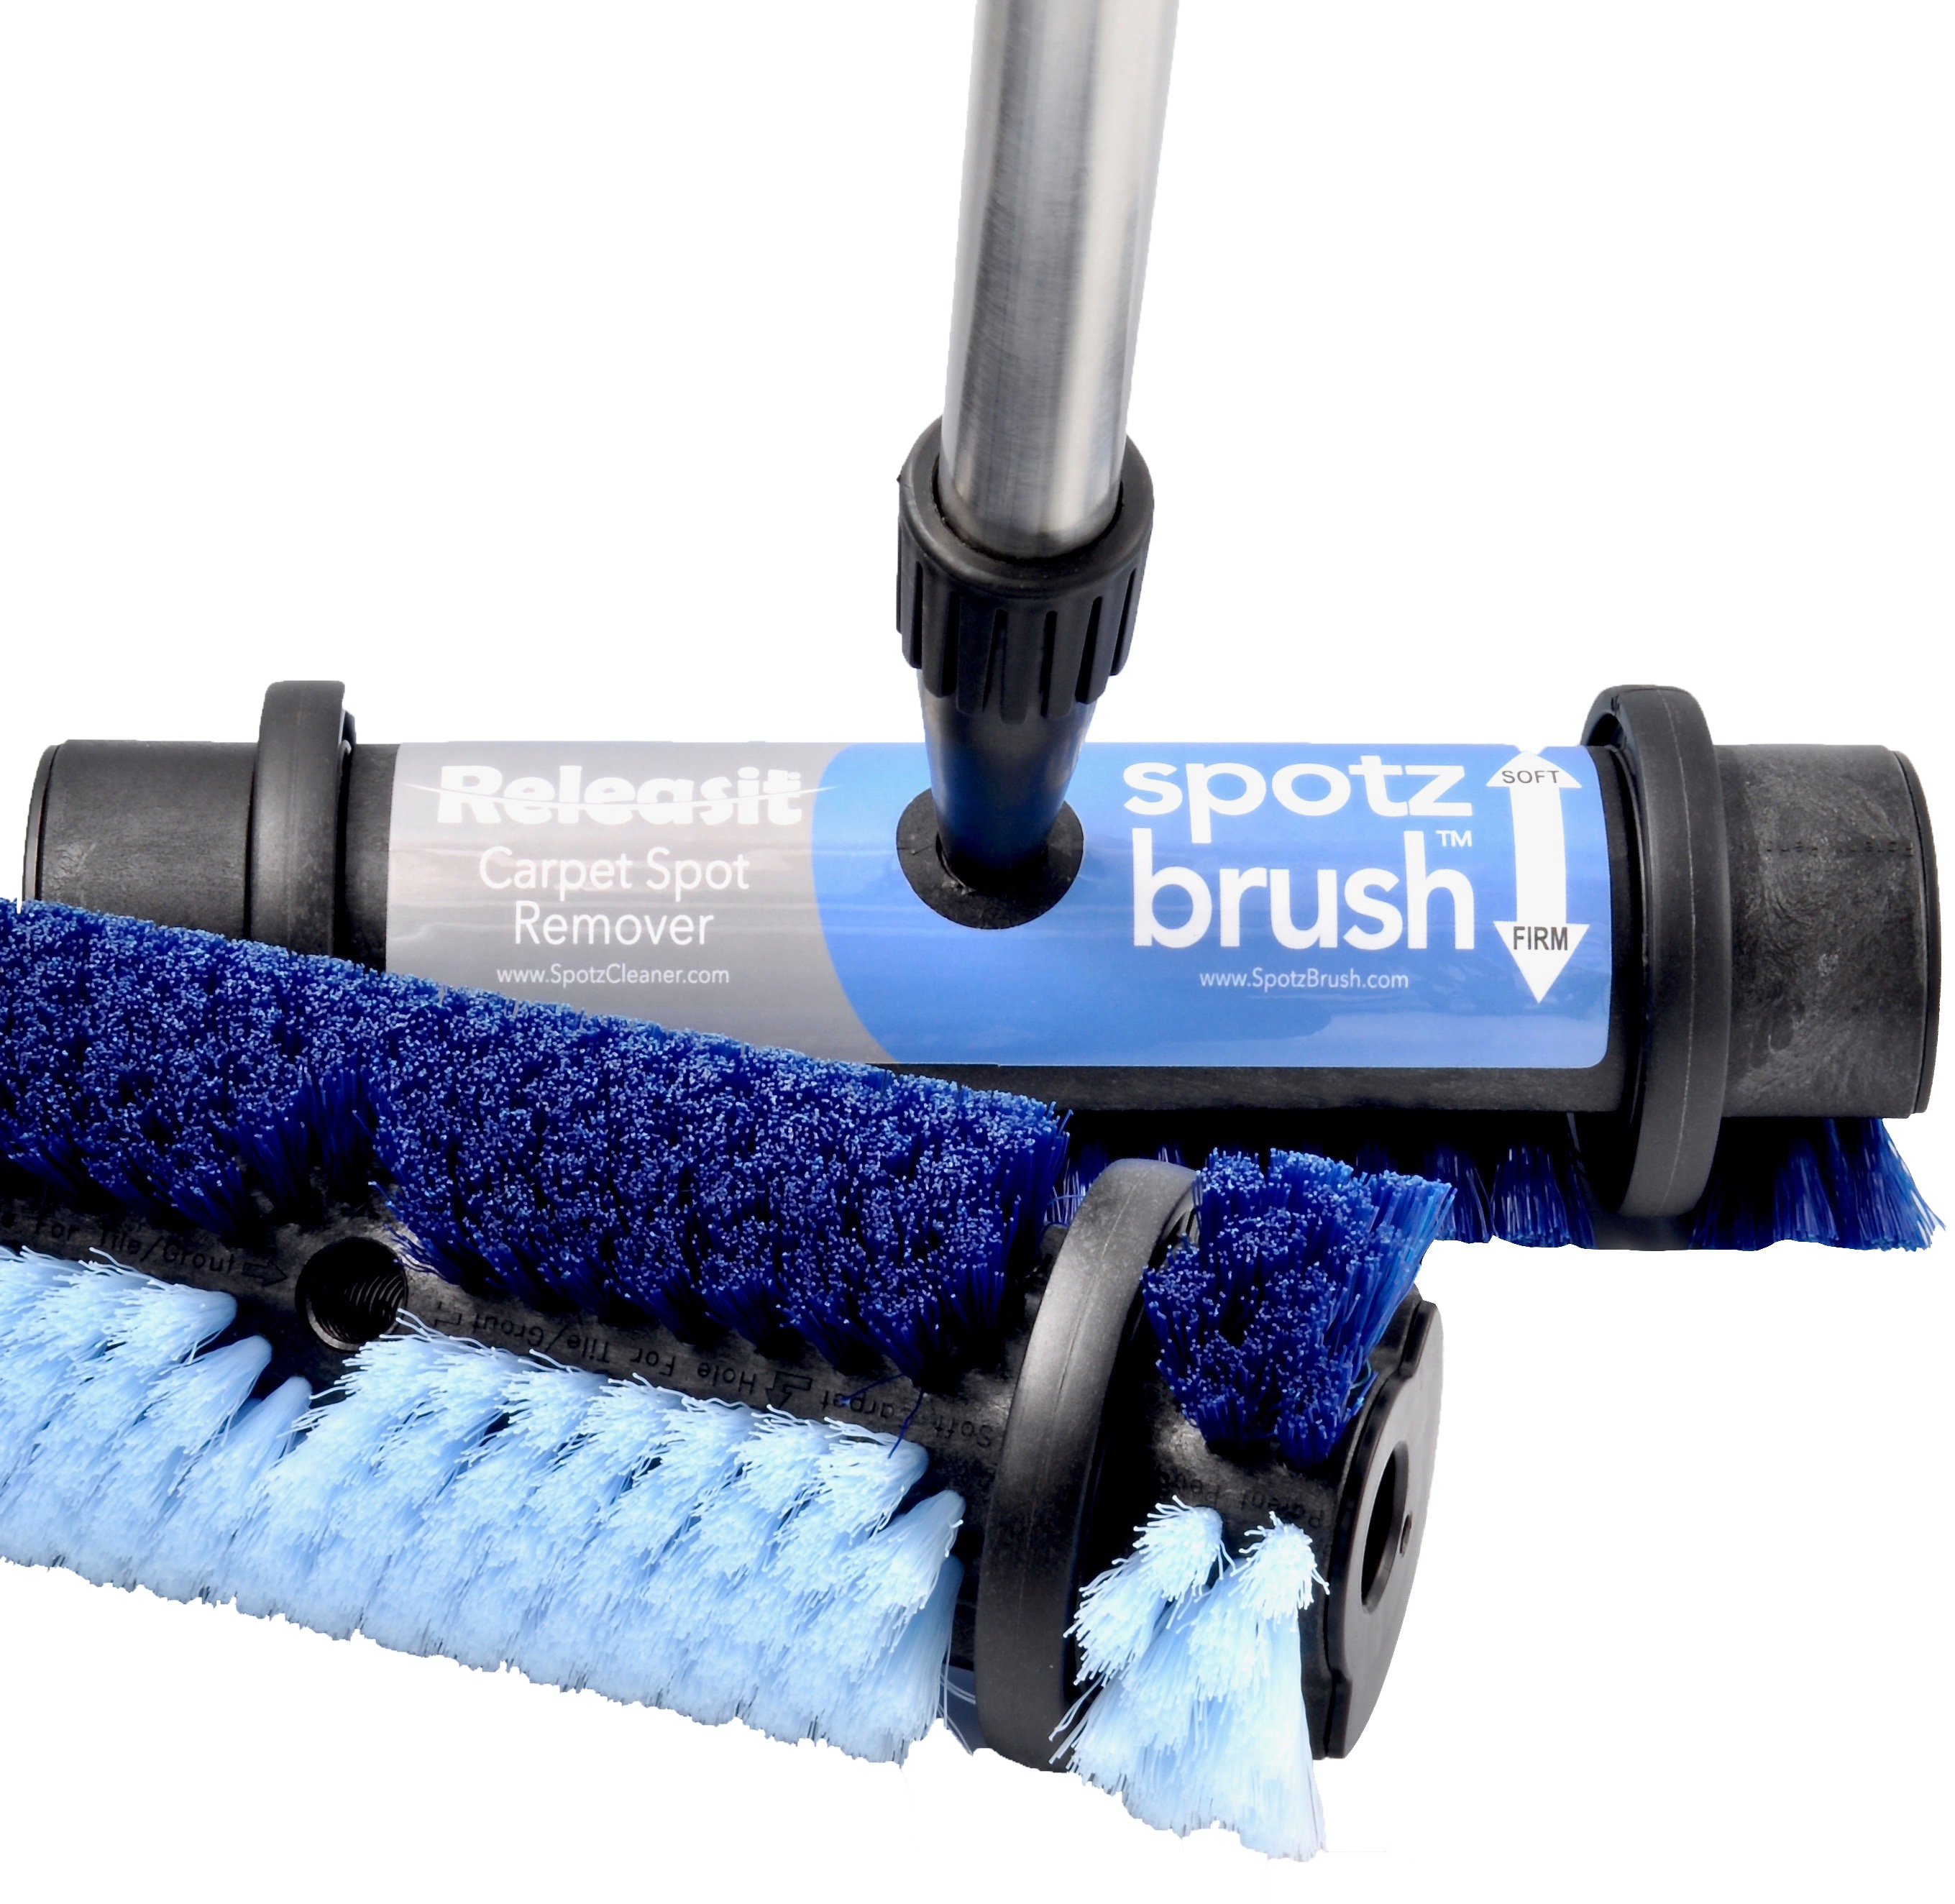 SpotzBrush - Spotting Brush Kit for Carpet Spot Removal and —  ExcellentSupply.com